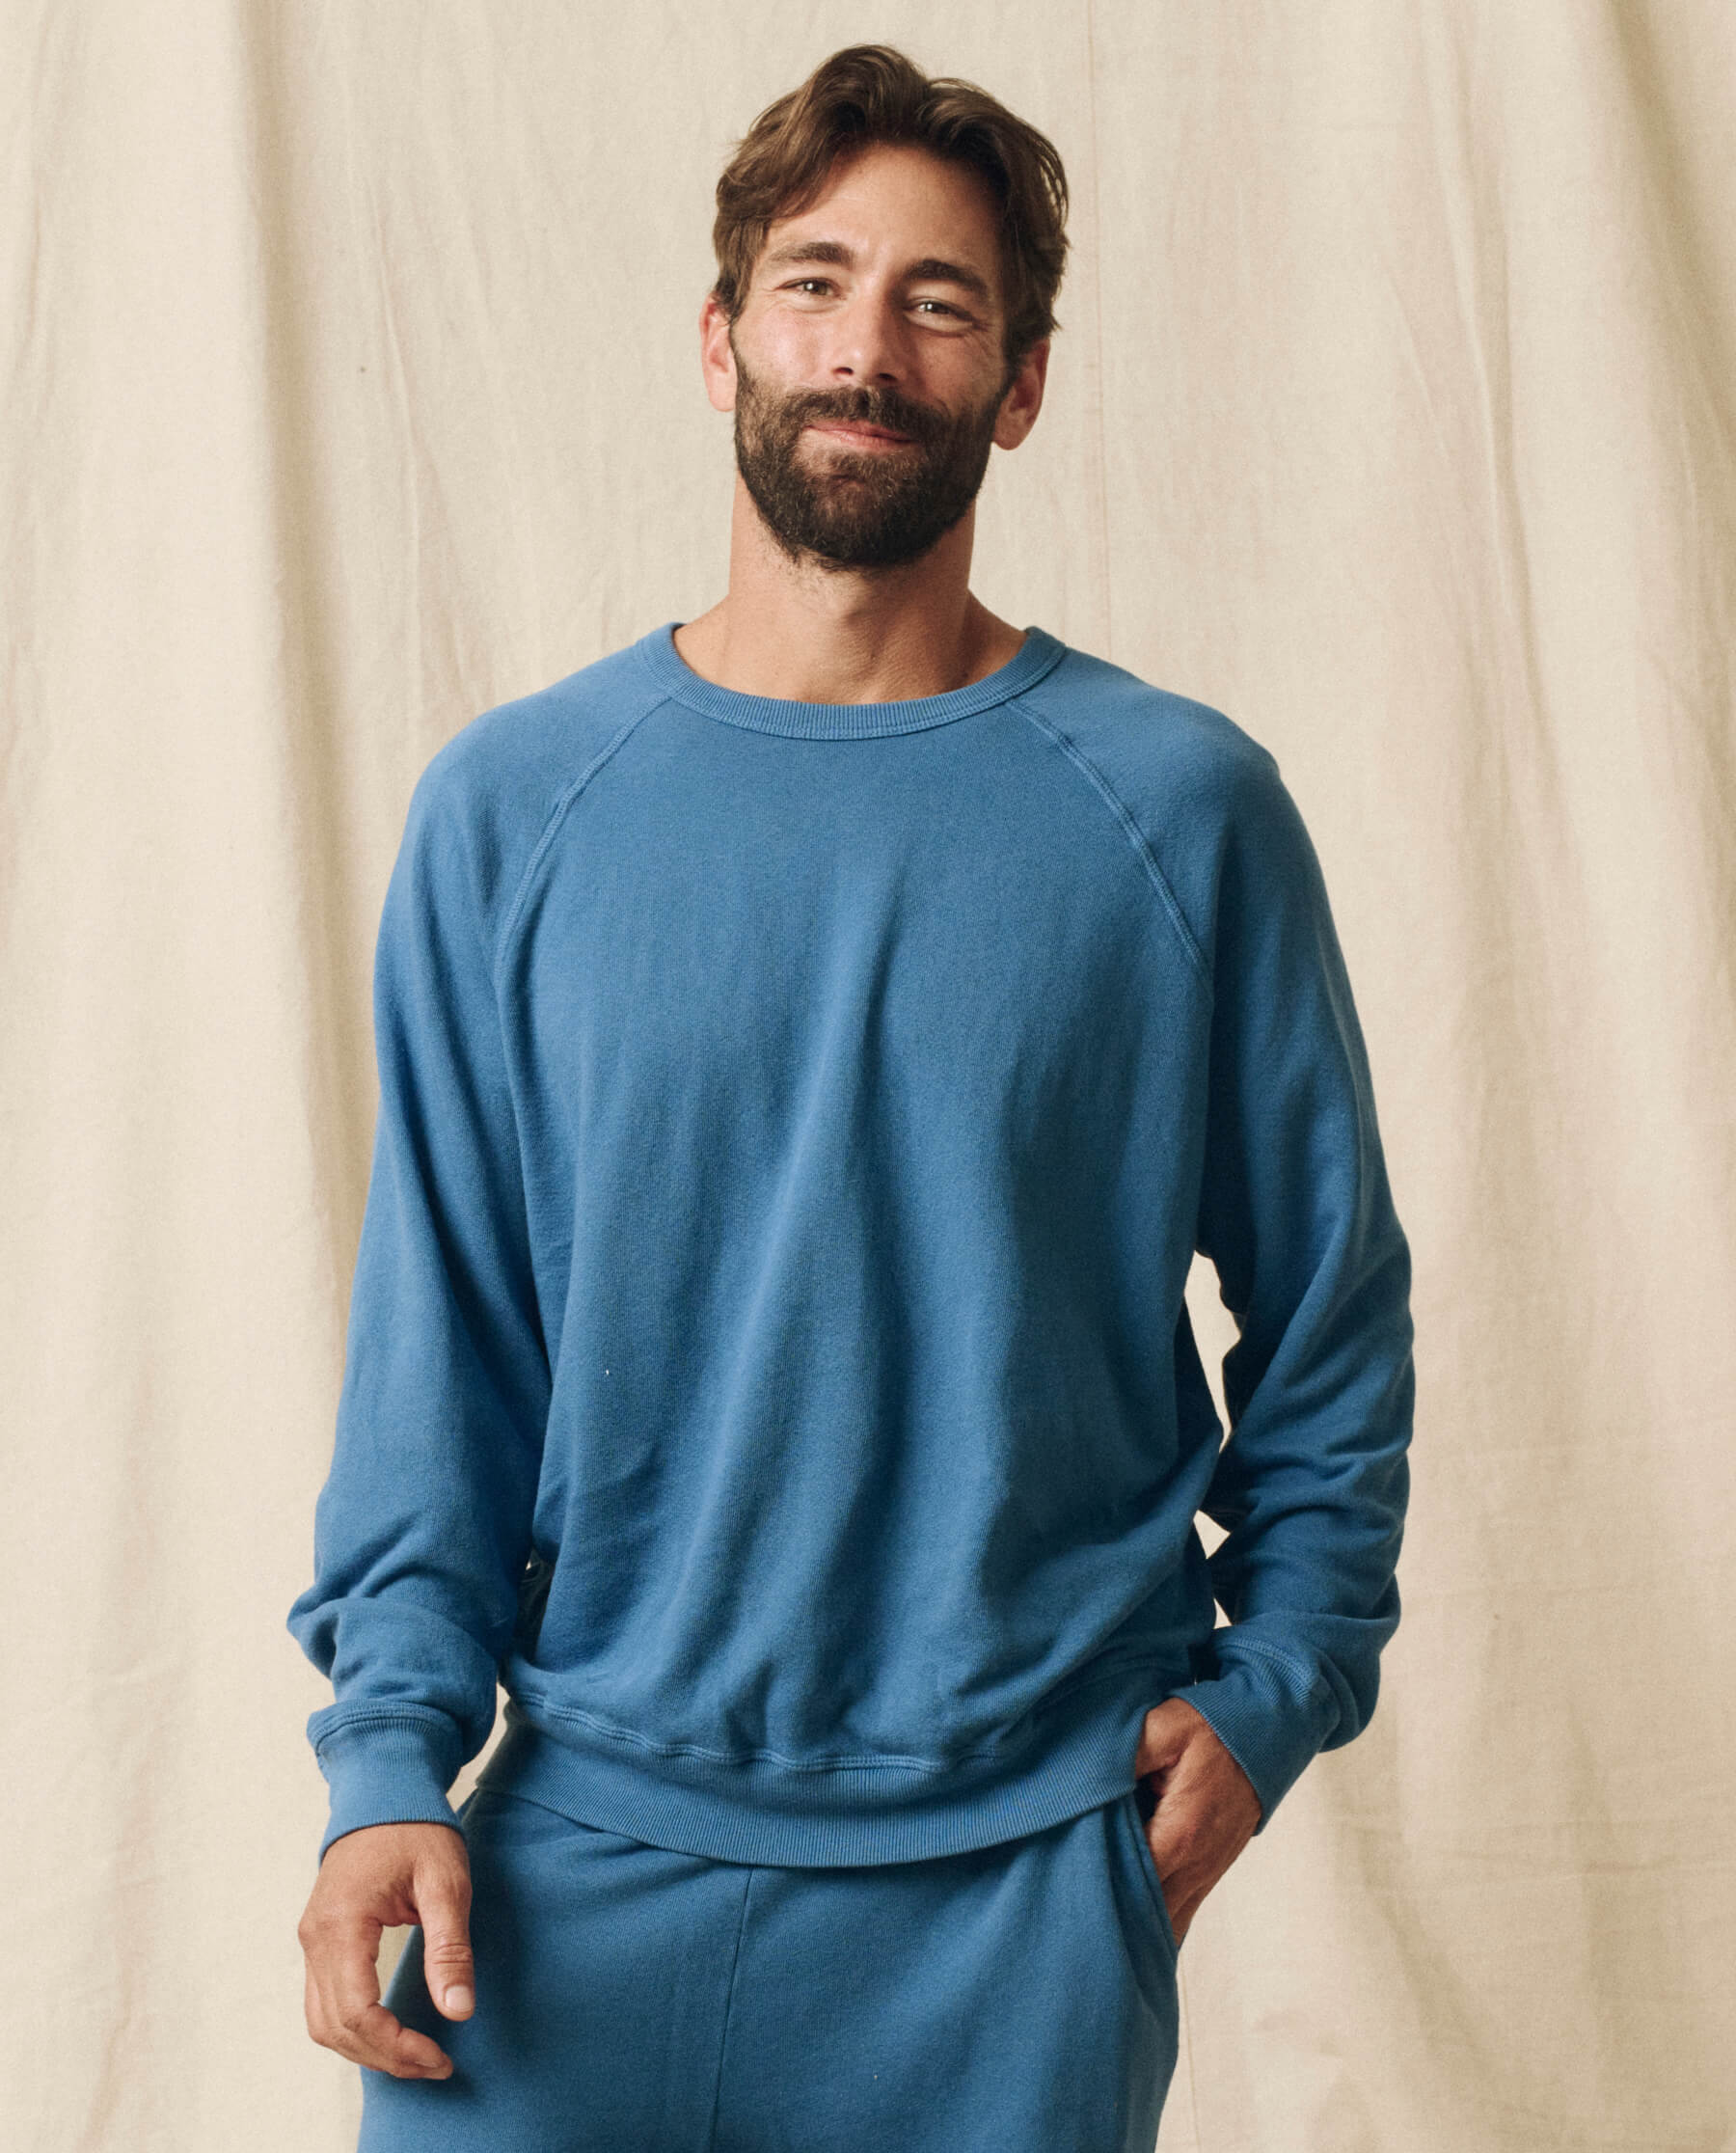 The Men's College Sweatshirt. Solid -- Glacier Blue SWEATSHIRTS THE GREAT. HOL 23 MEN